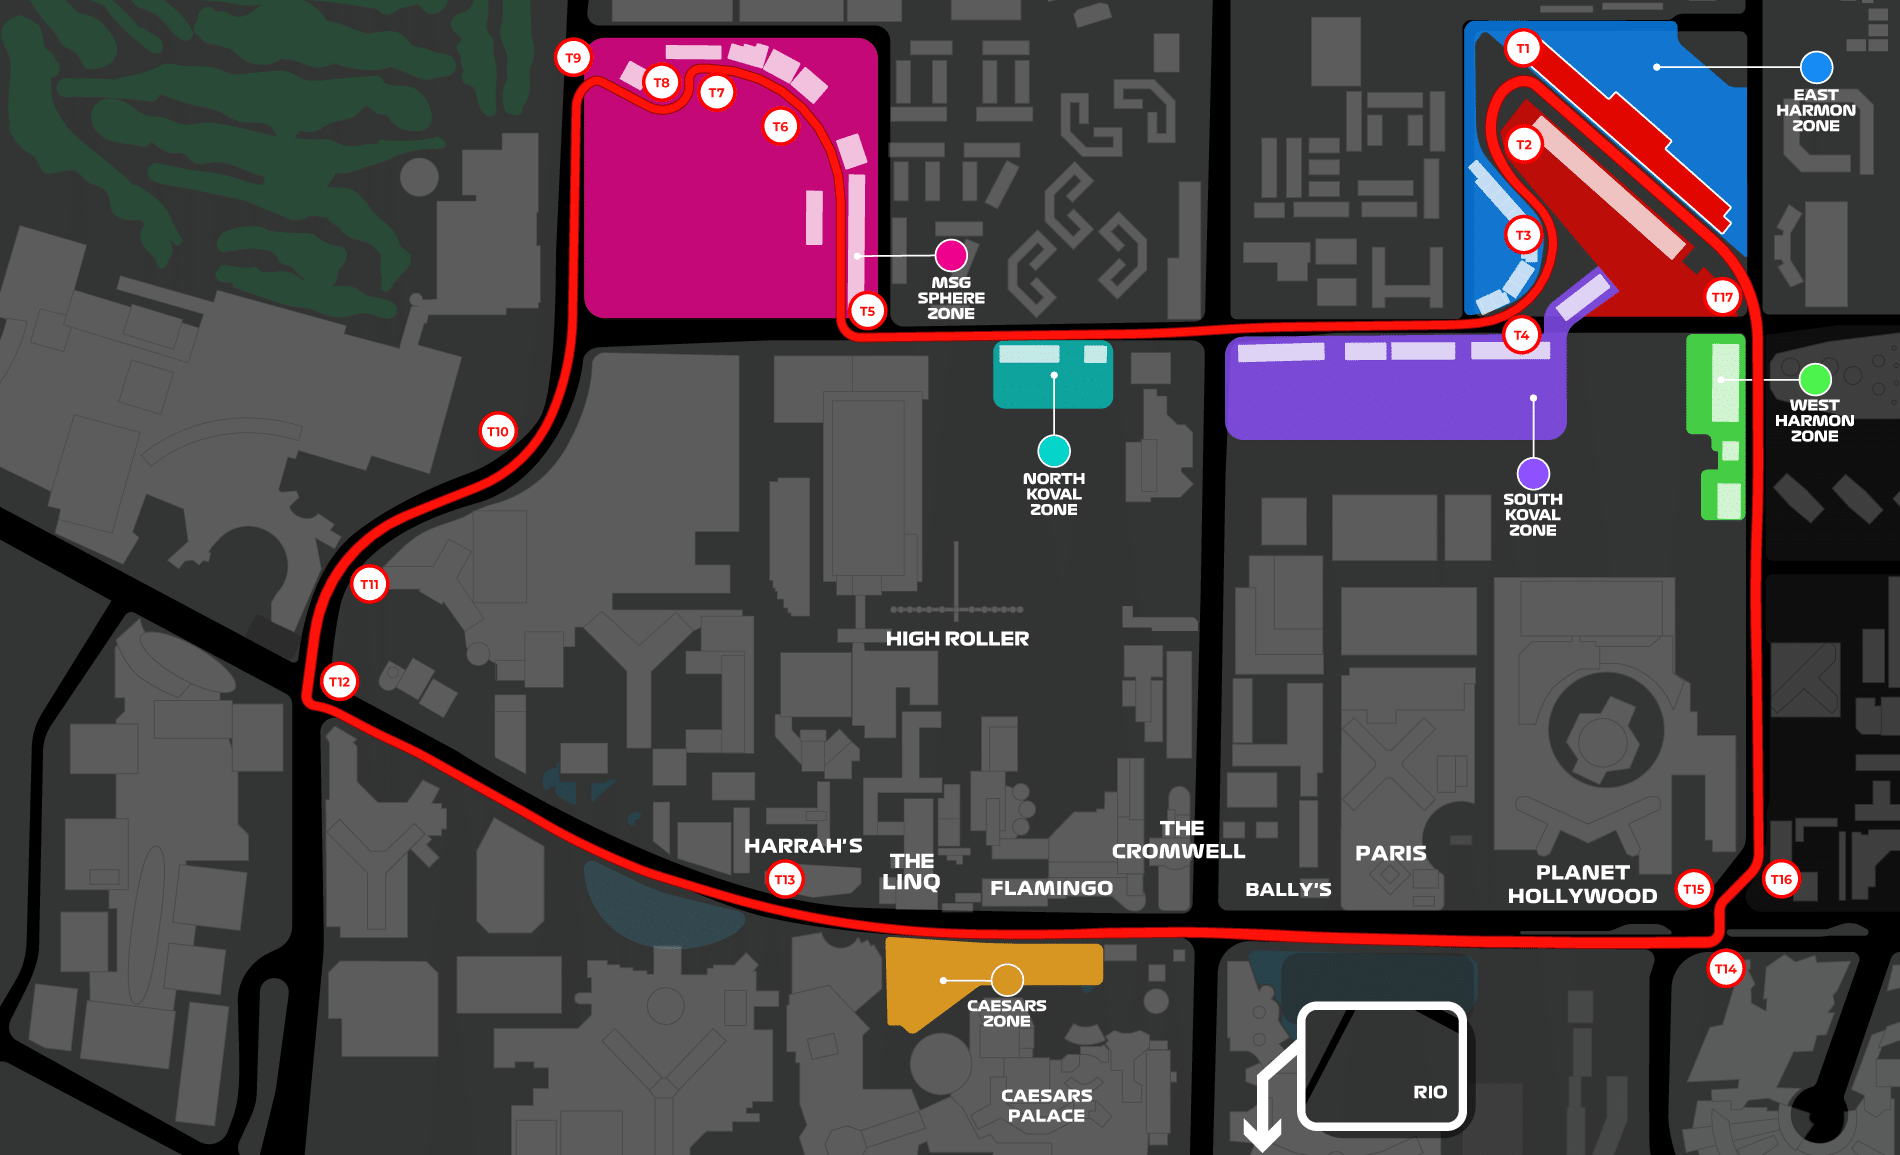 Miami Grand Prix Layout - F1 Circuit Map & Guide